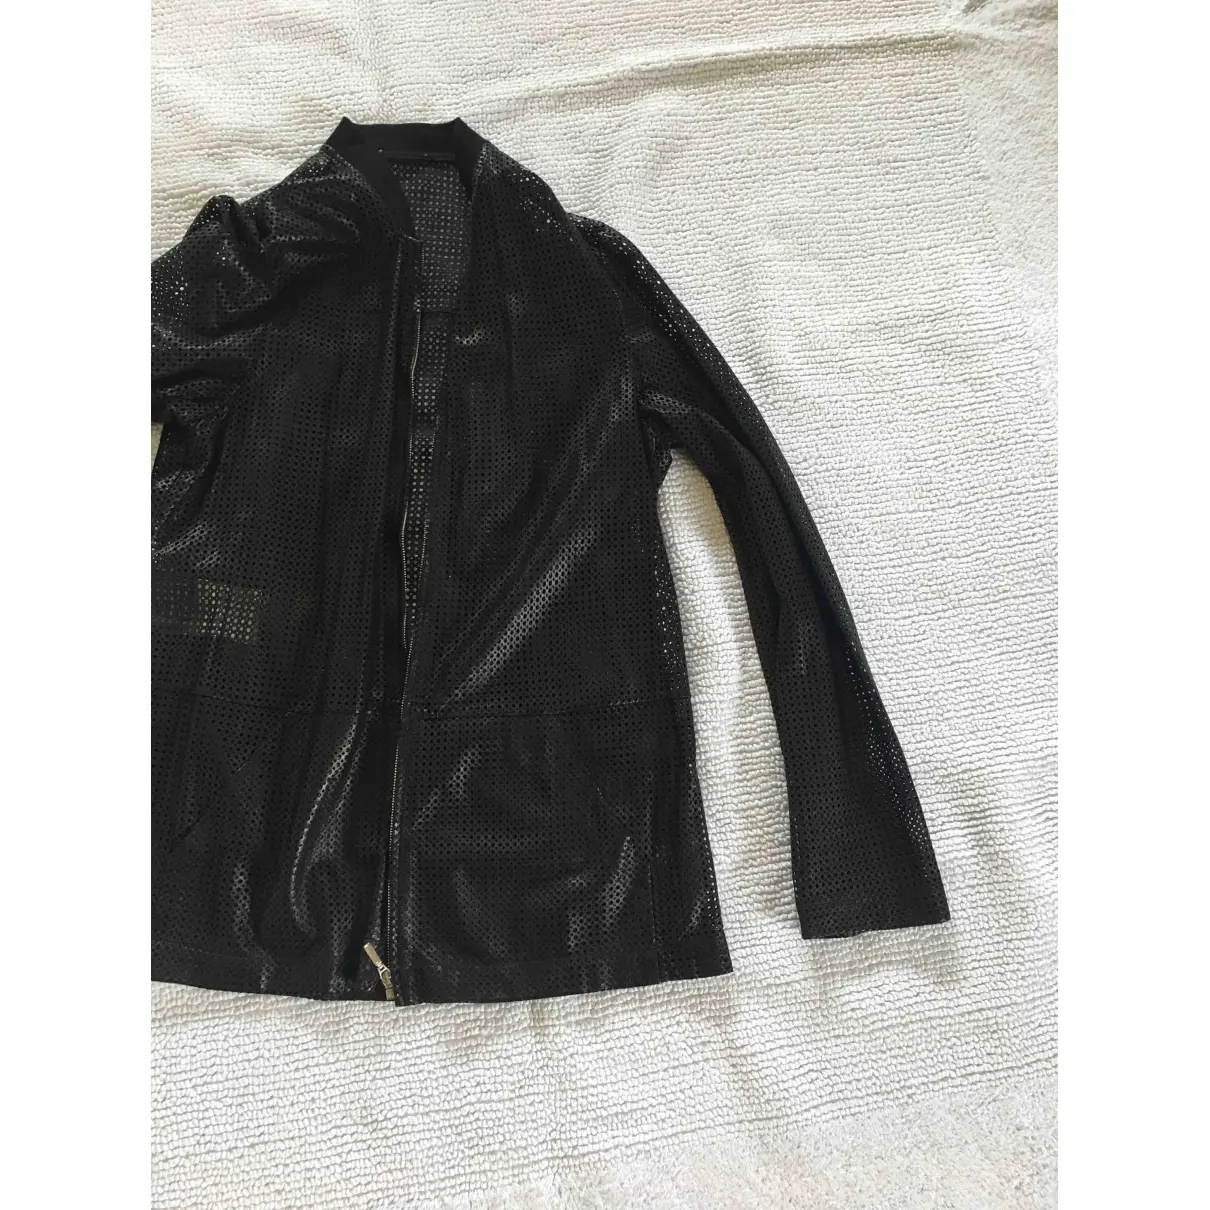 Leather vest Gianni Versace - Vintage